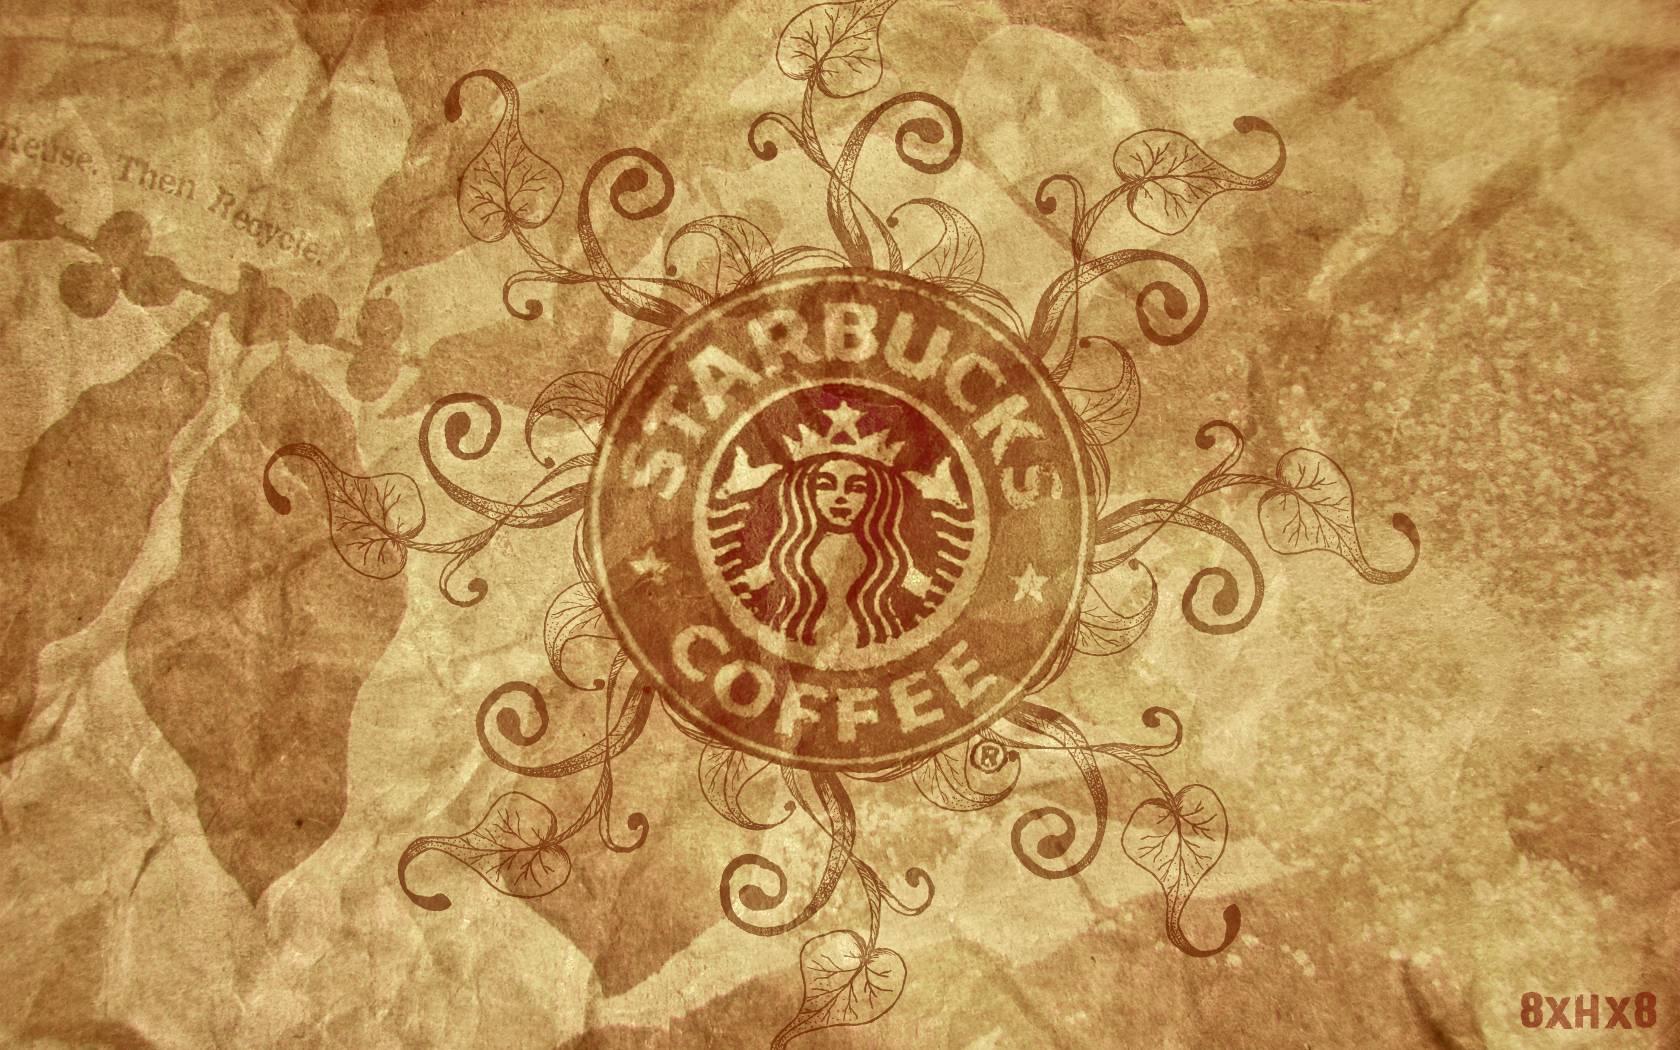 Starbucks Hd Wallpaper 4k Download Full Screen